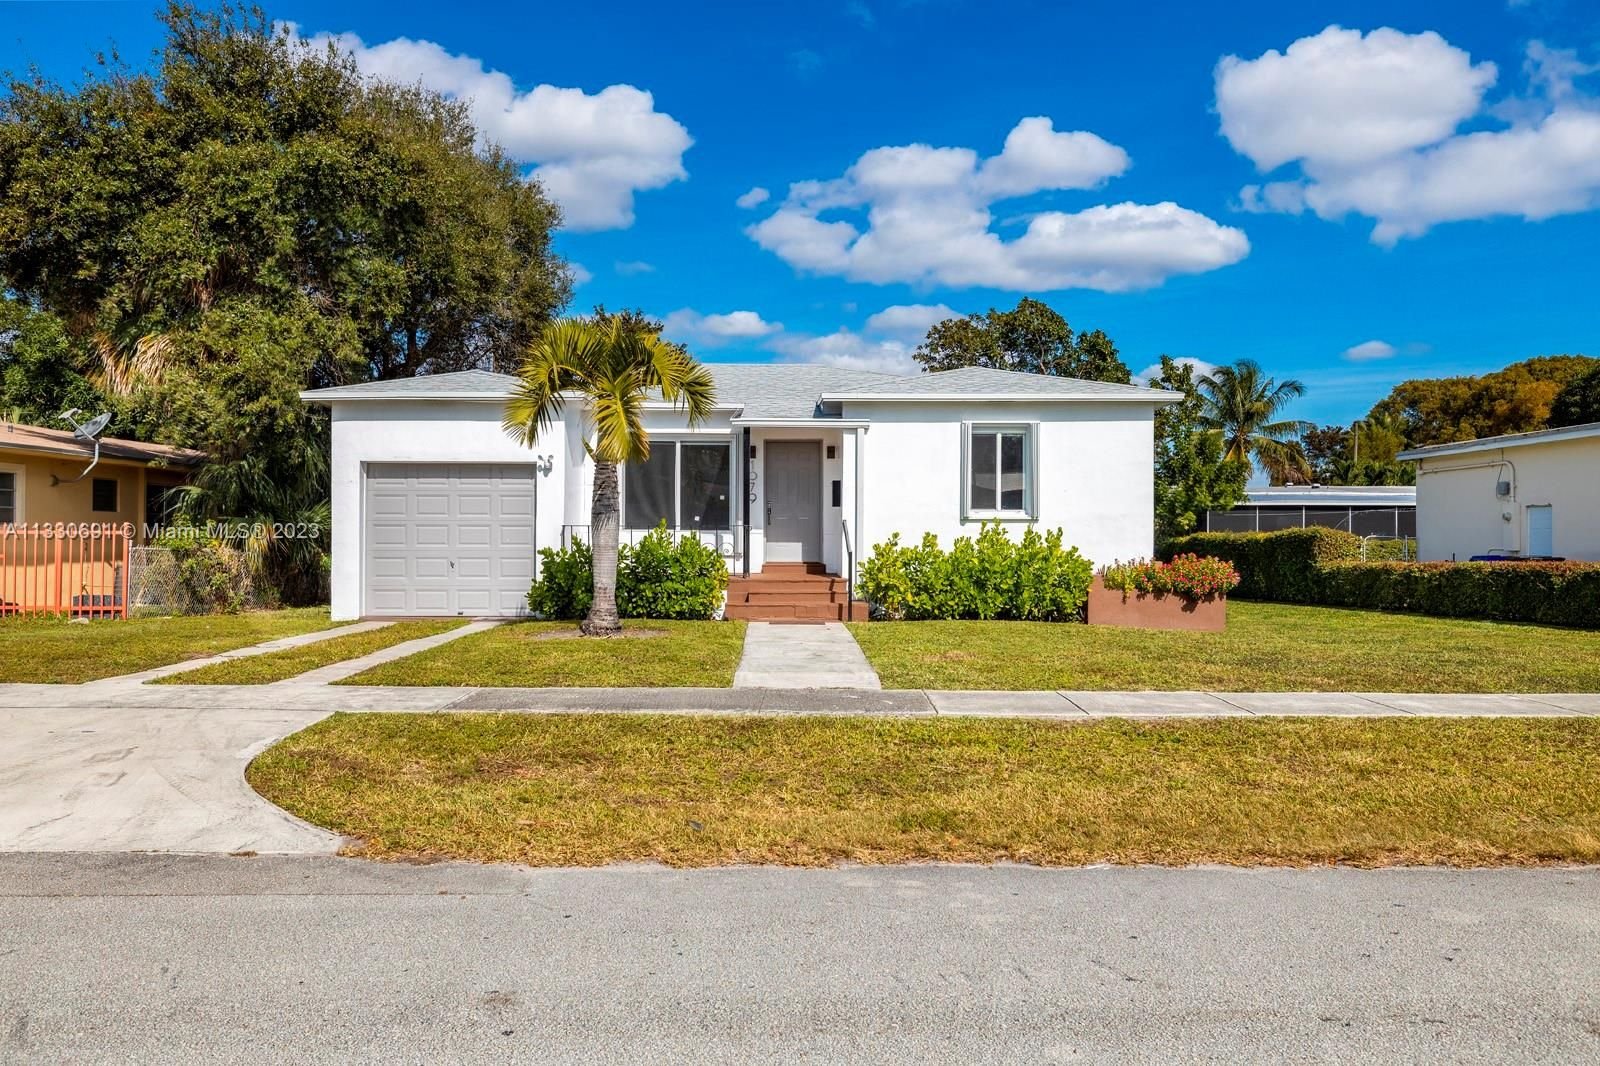 Real estate property located at 1079 165th Terrace, Miami-Dade County, North Miami Beach, FL